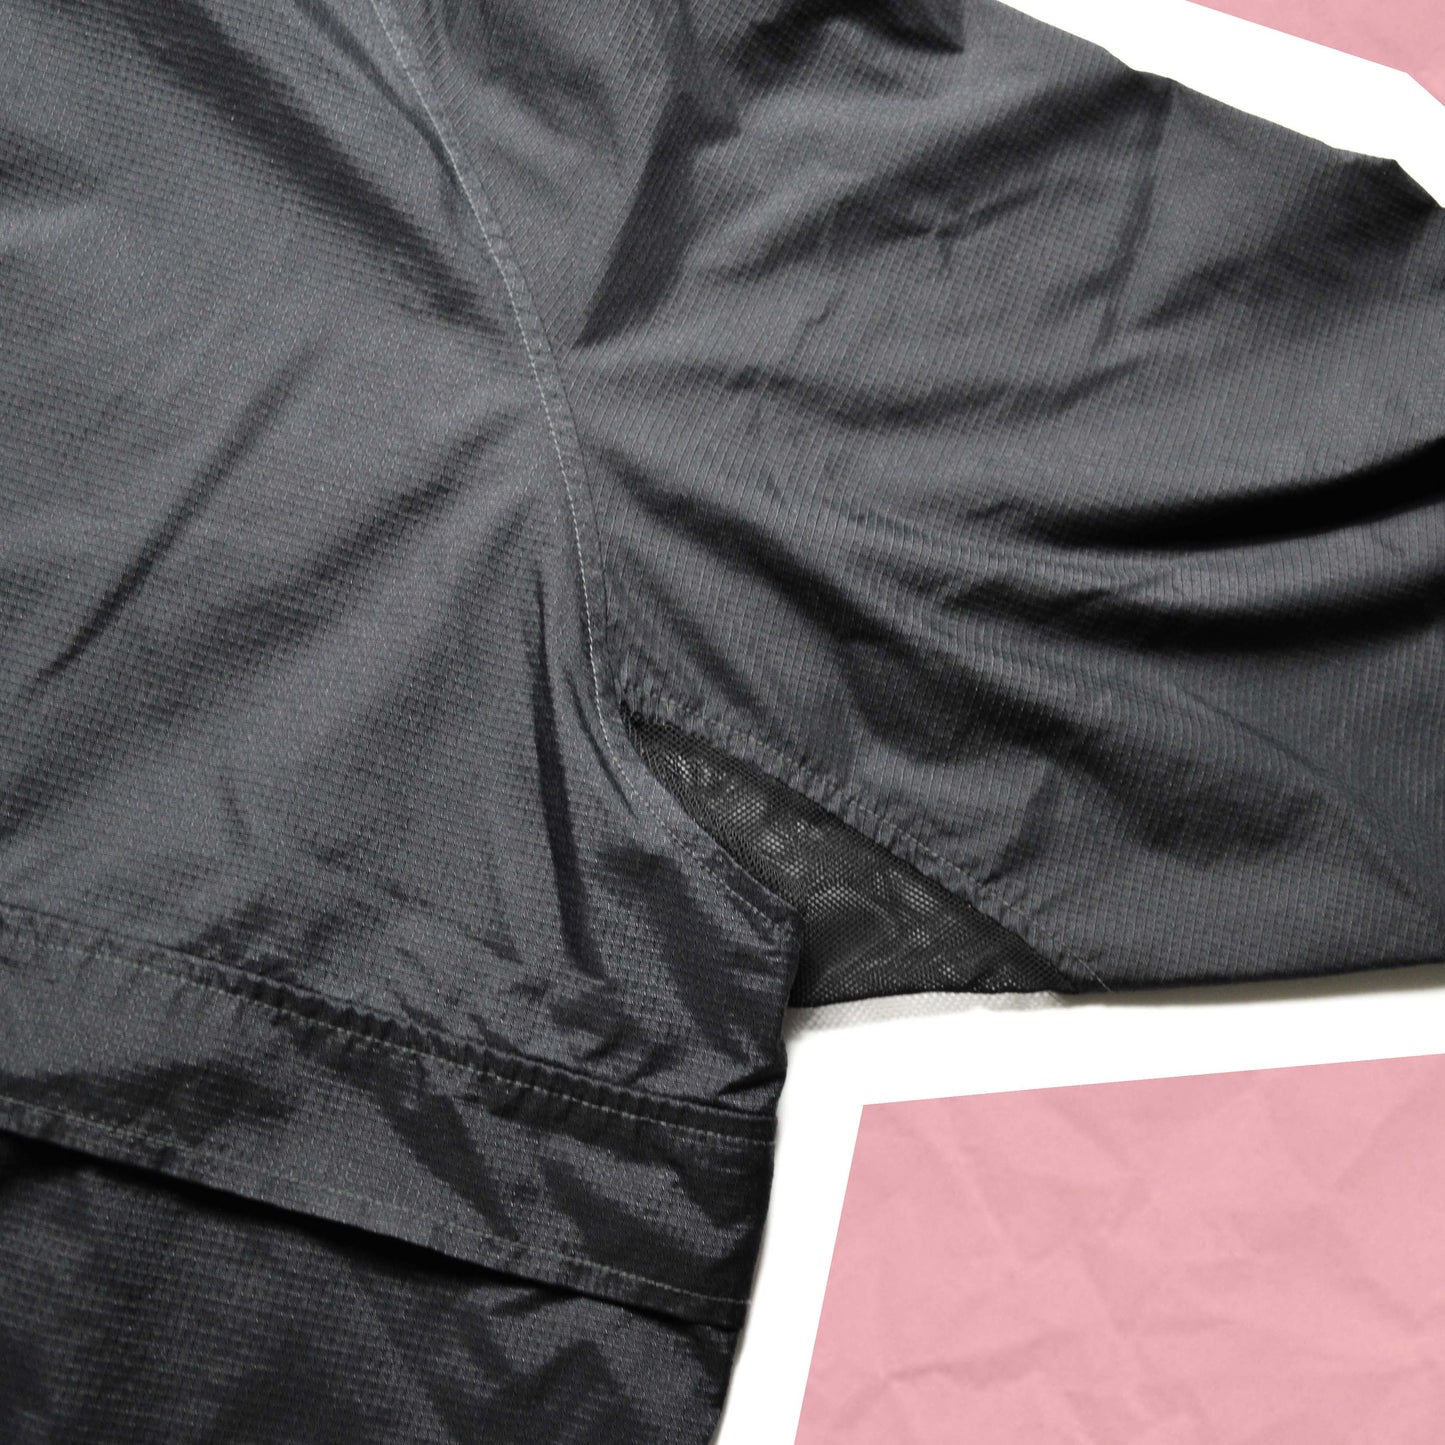 Nike ACG Deep Grey Ripstop Quarter Zip Packable Pullover Jacket (XL)